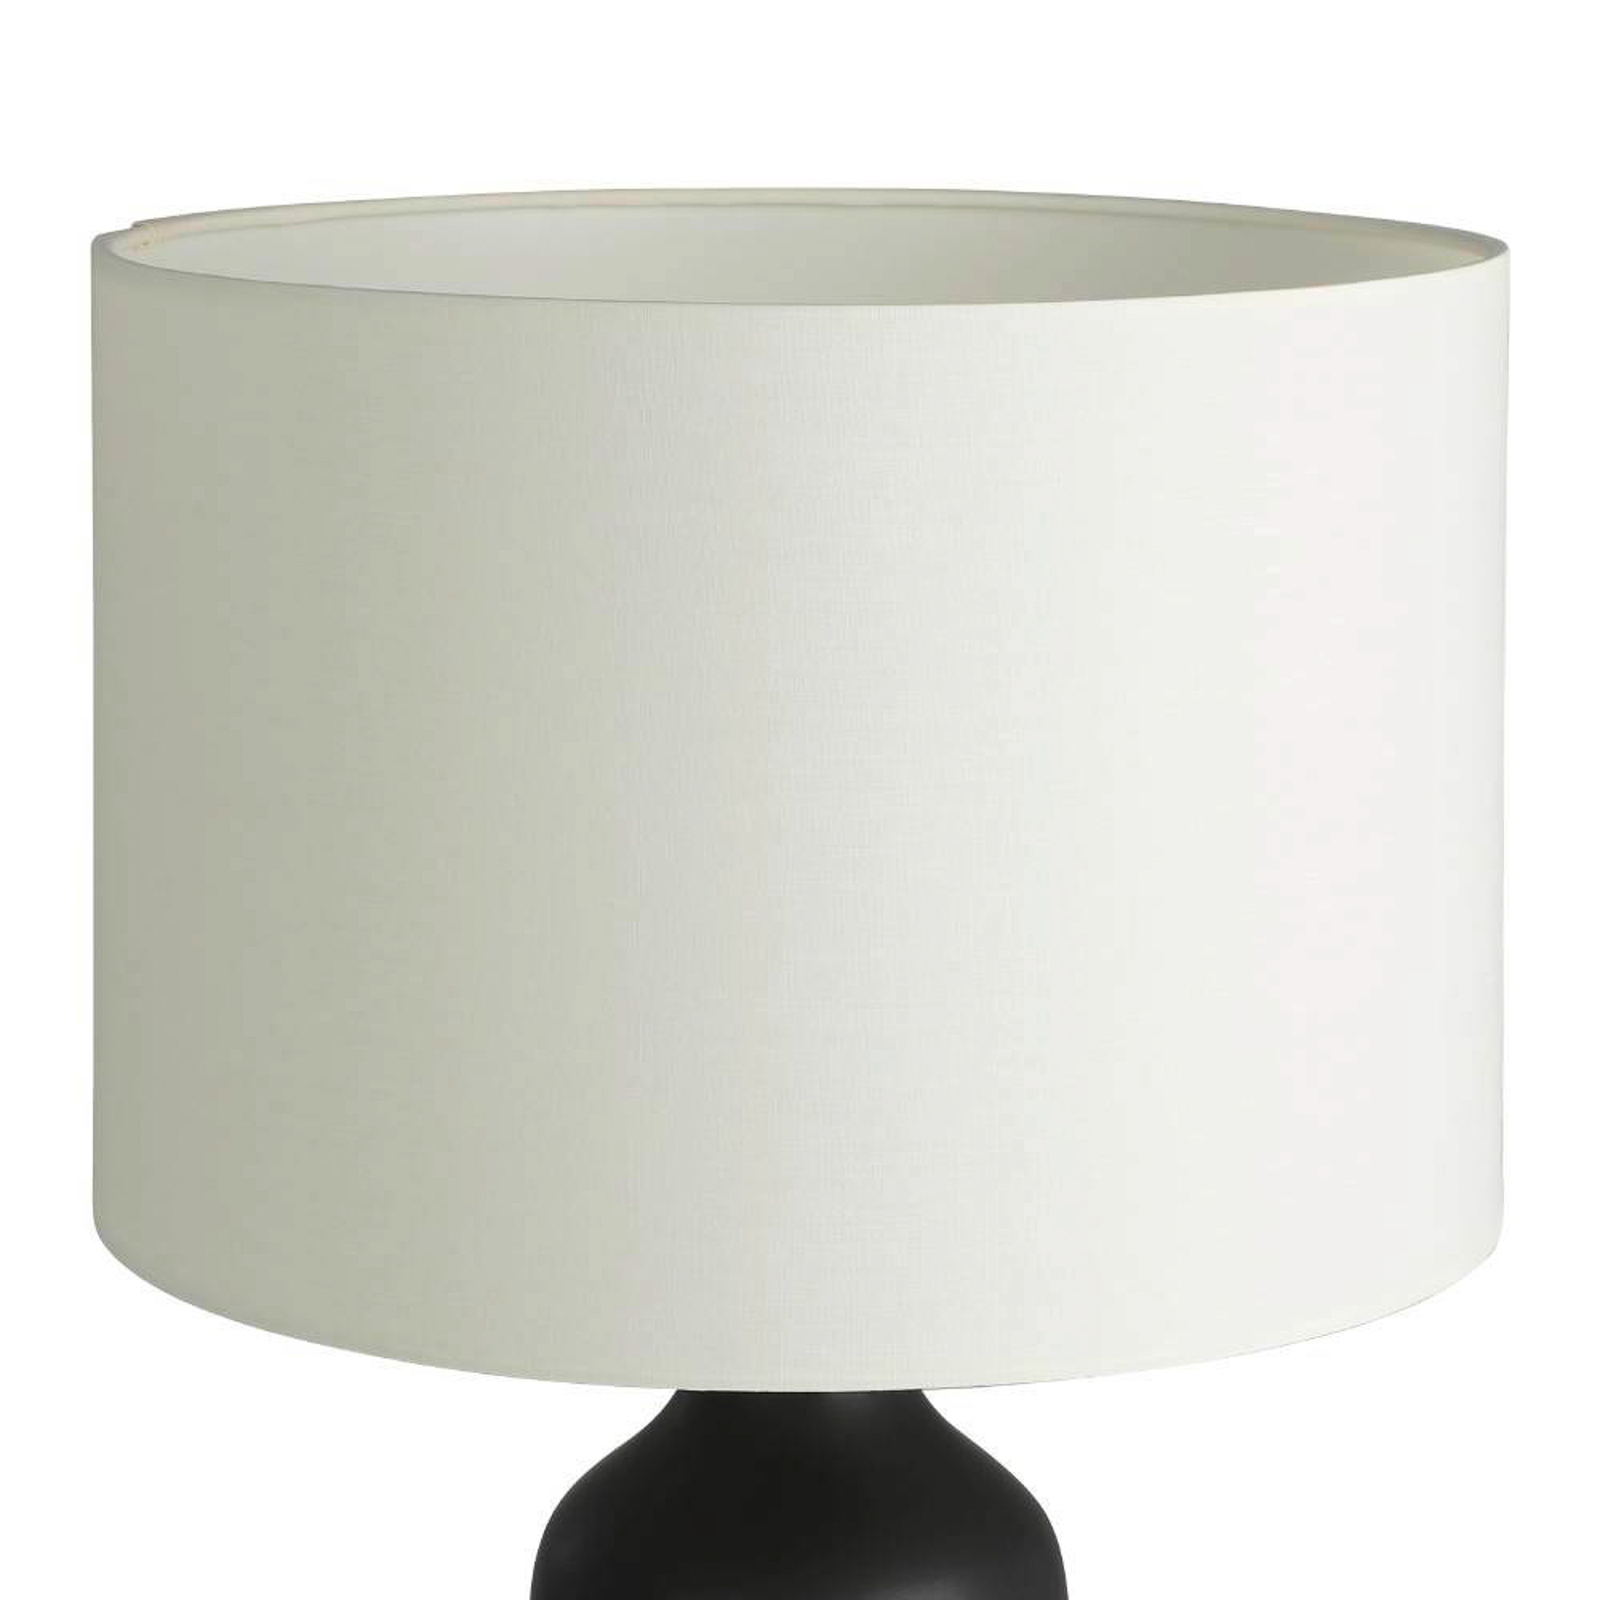 EGLO Vinoza bordslampa, fot svart, skärm vit